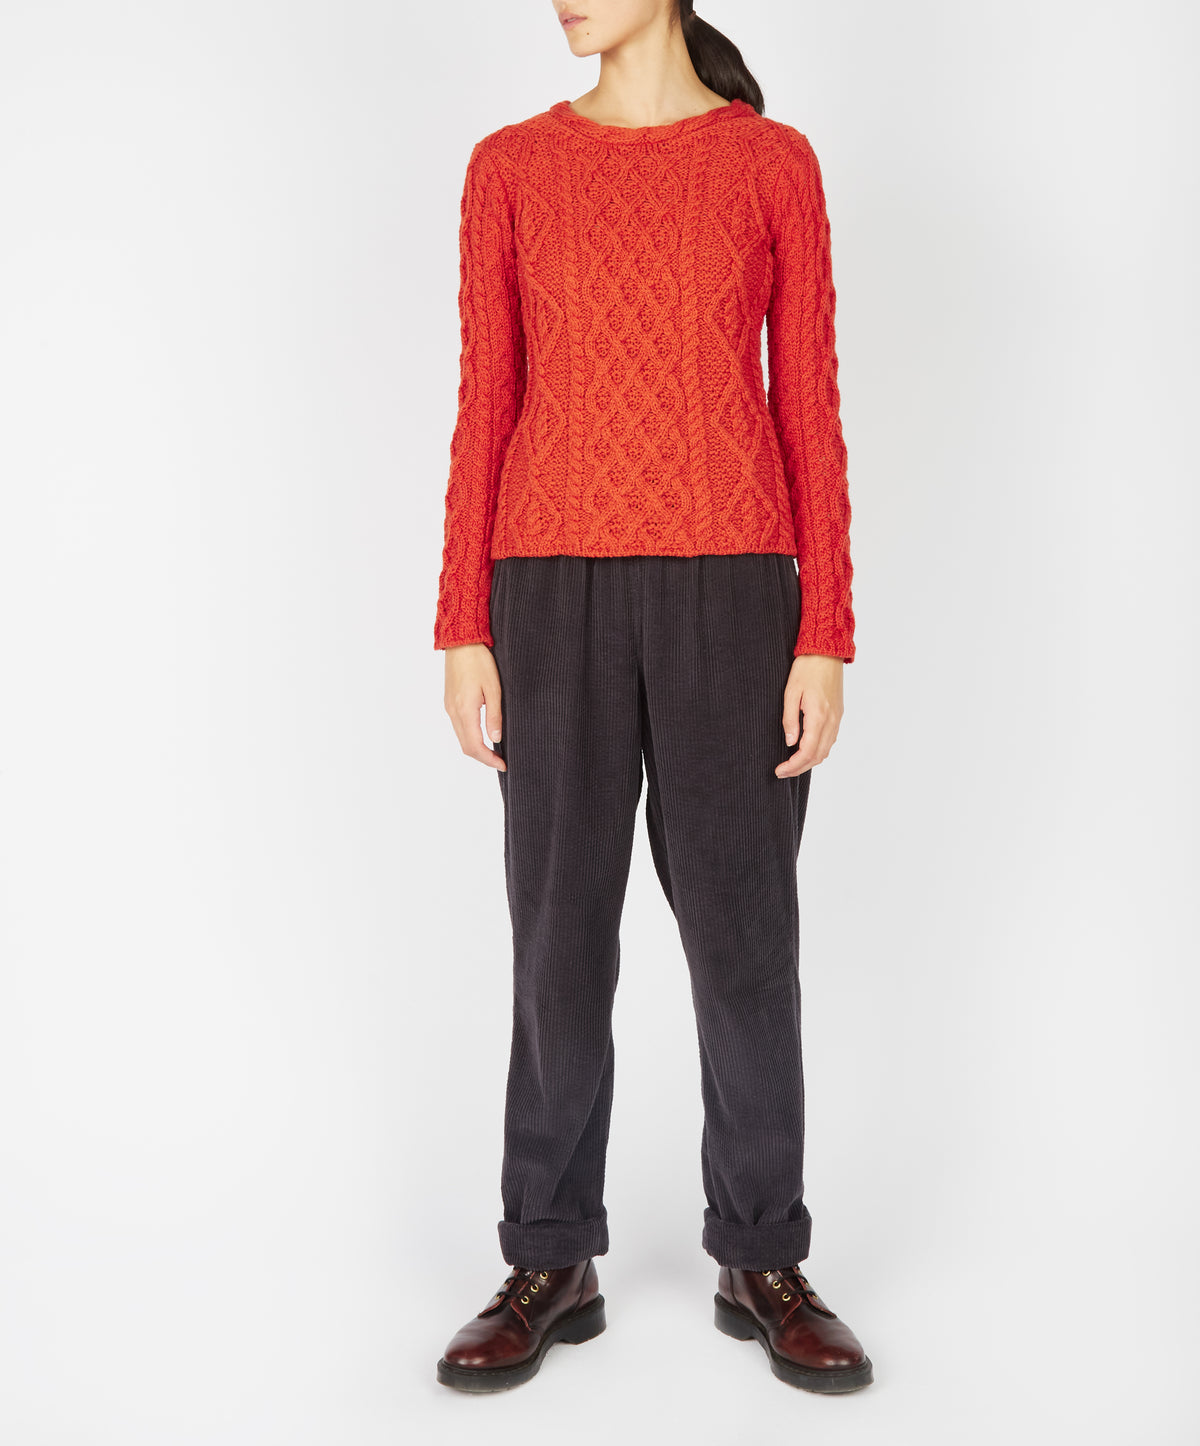 IrelandsEye Knitwear Lambay Lattice Cable Aran Sweater Orange Marl